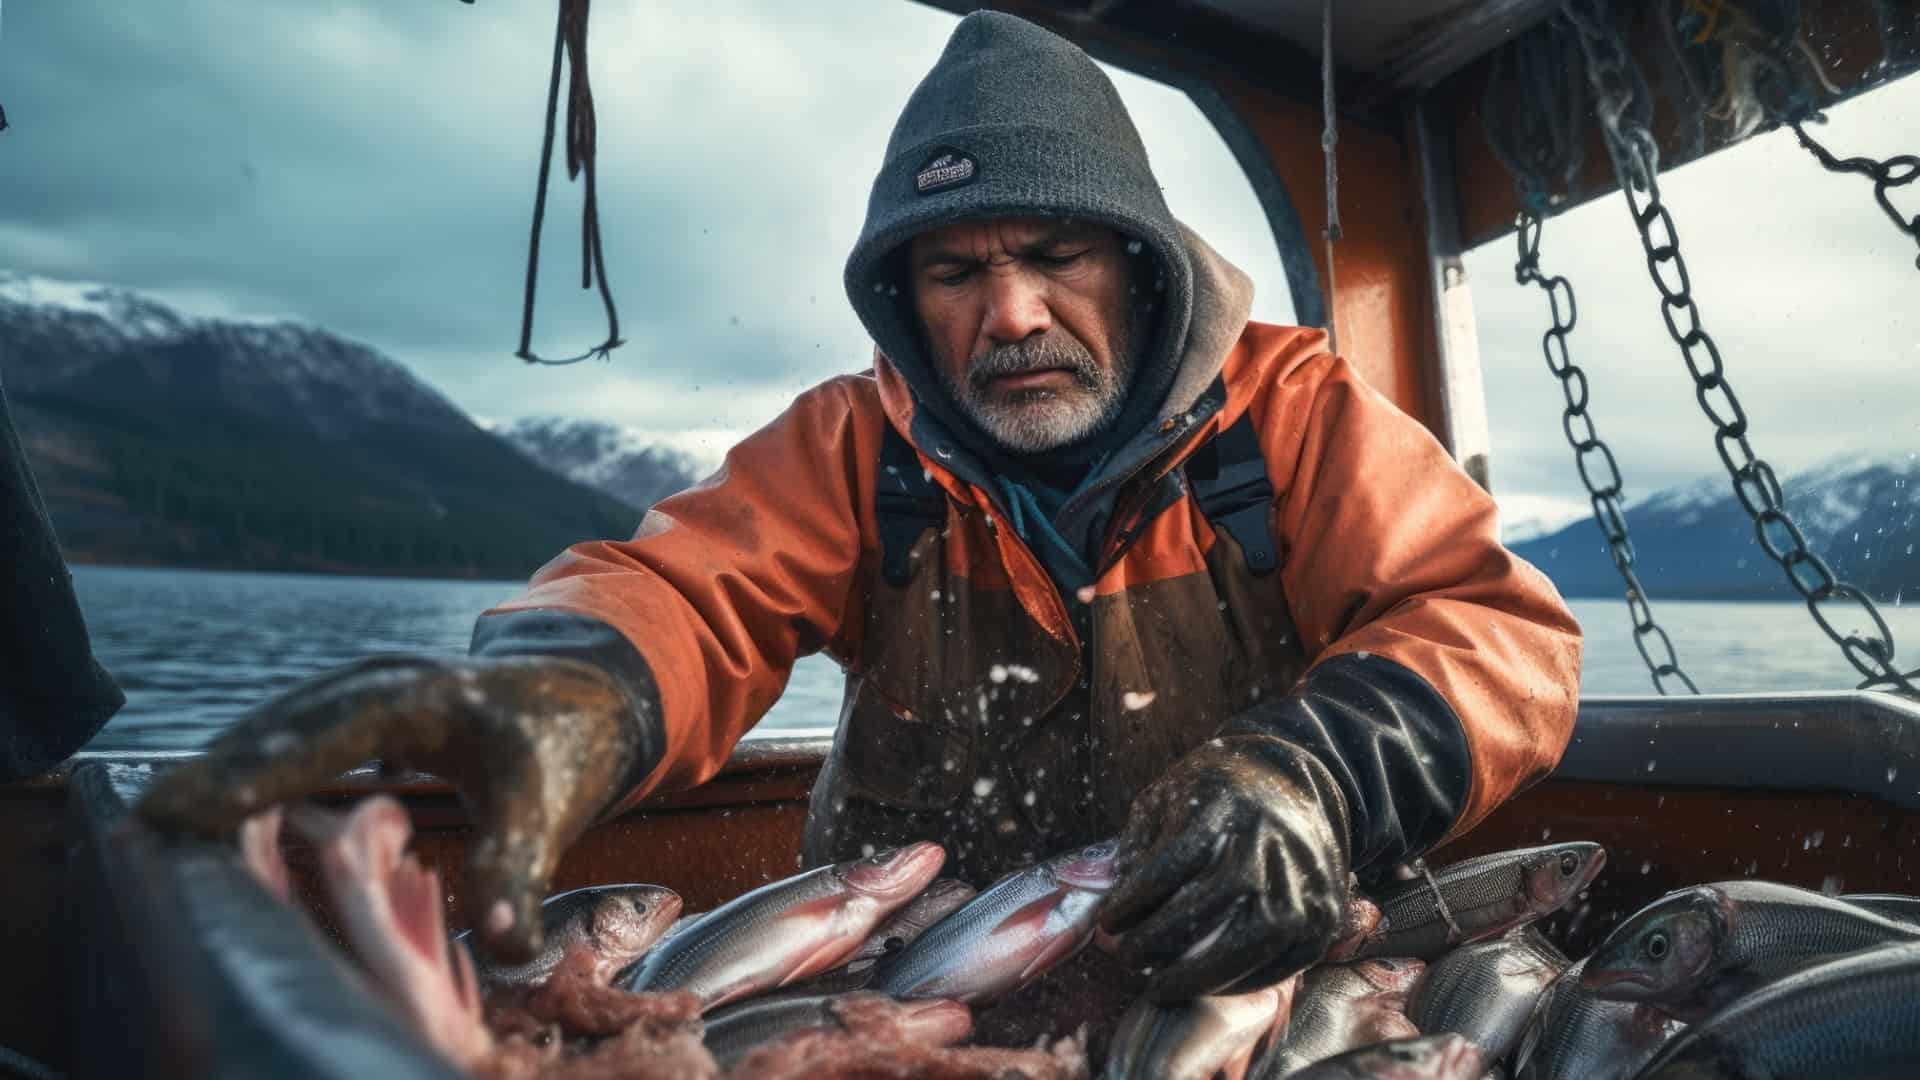 Alaska fisherman working on a boat catching fish.